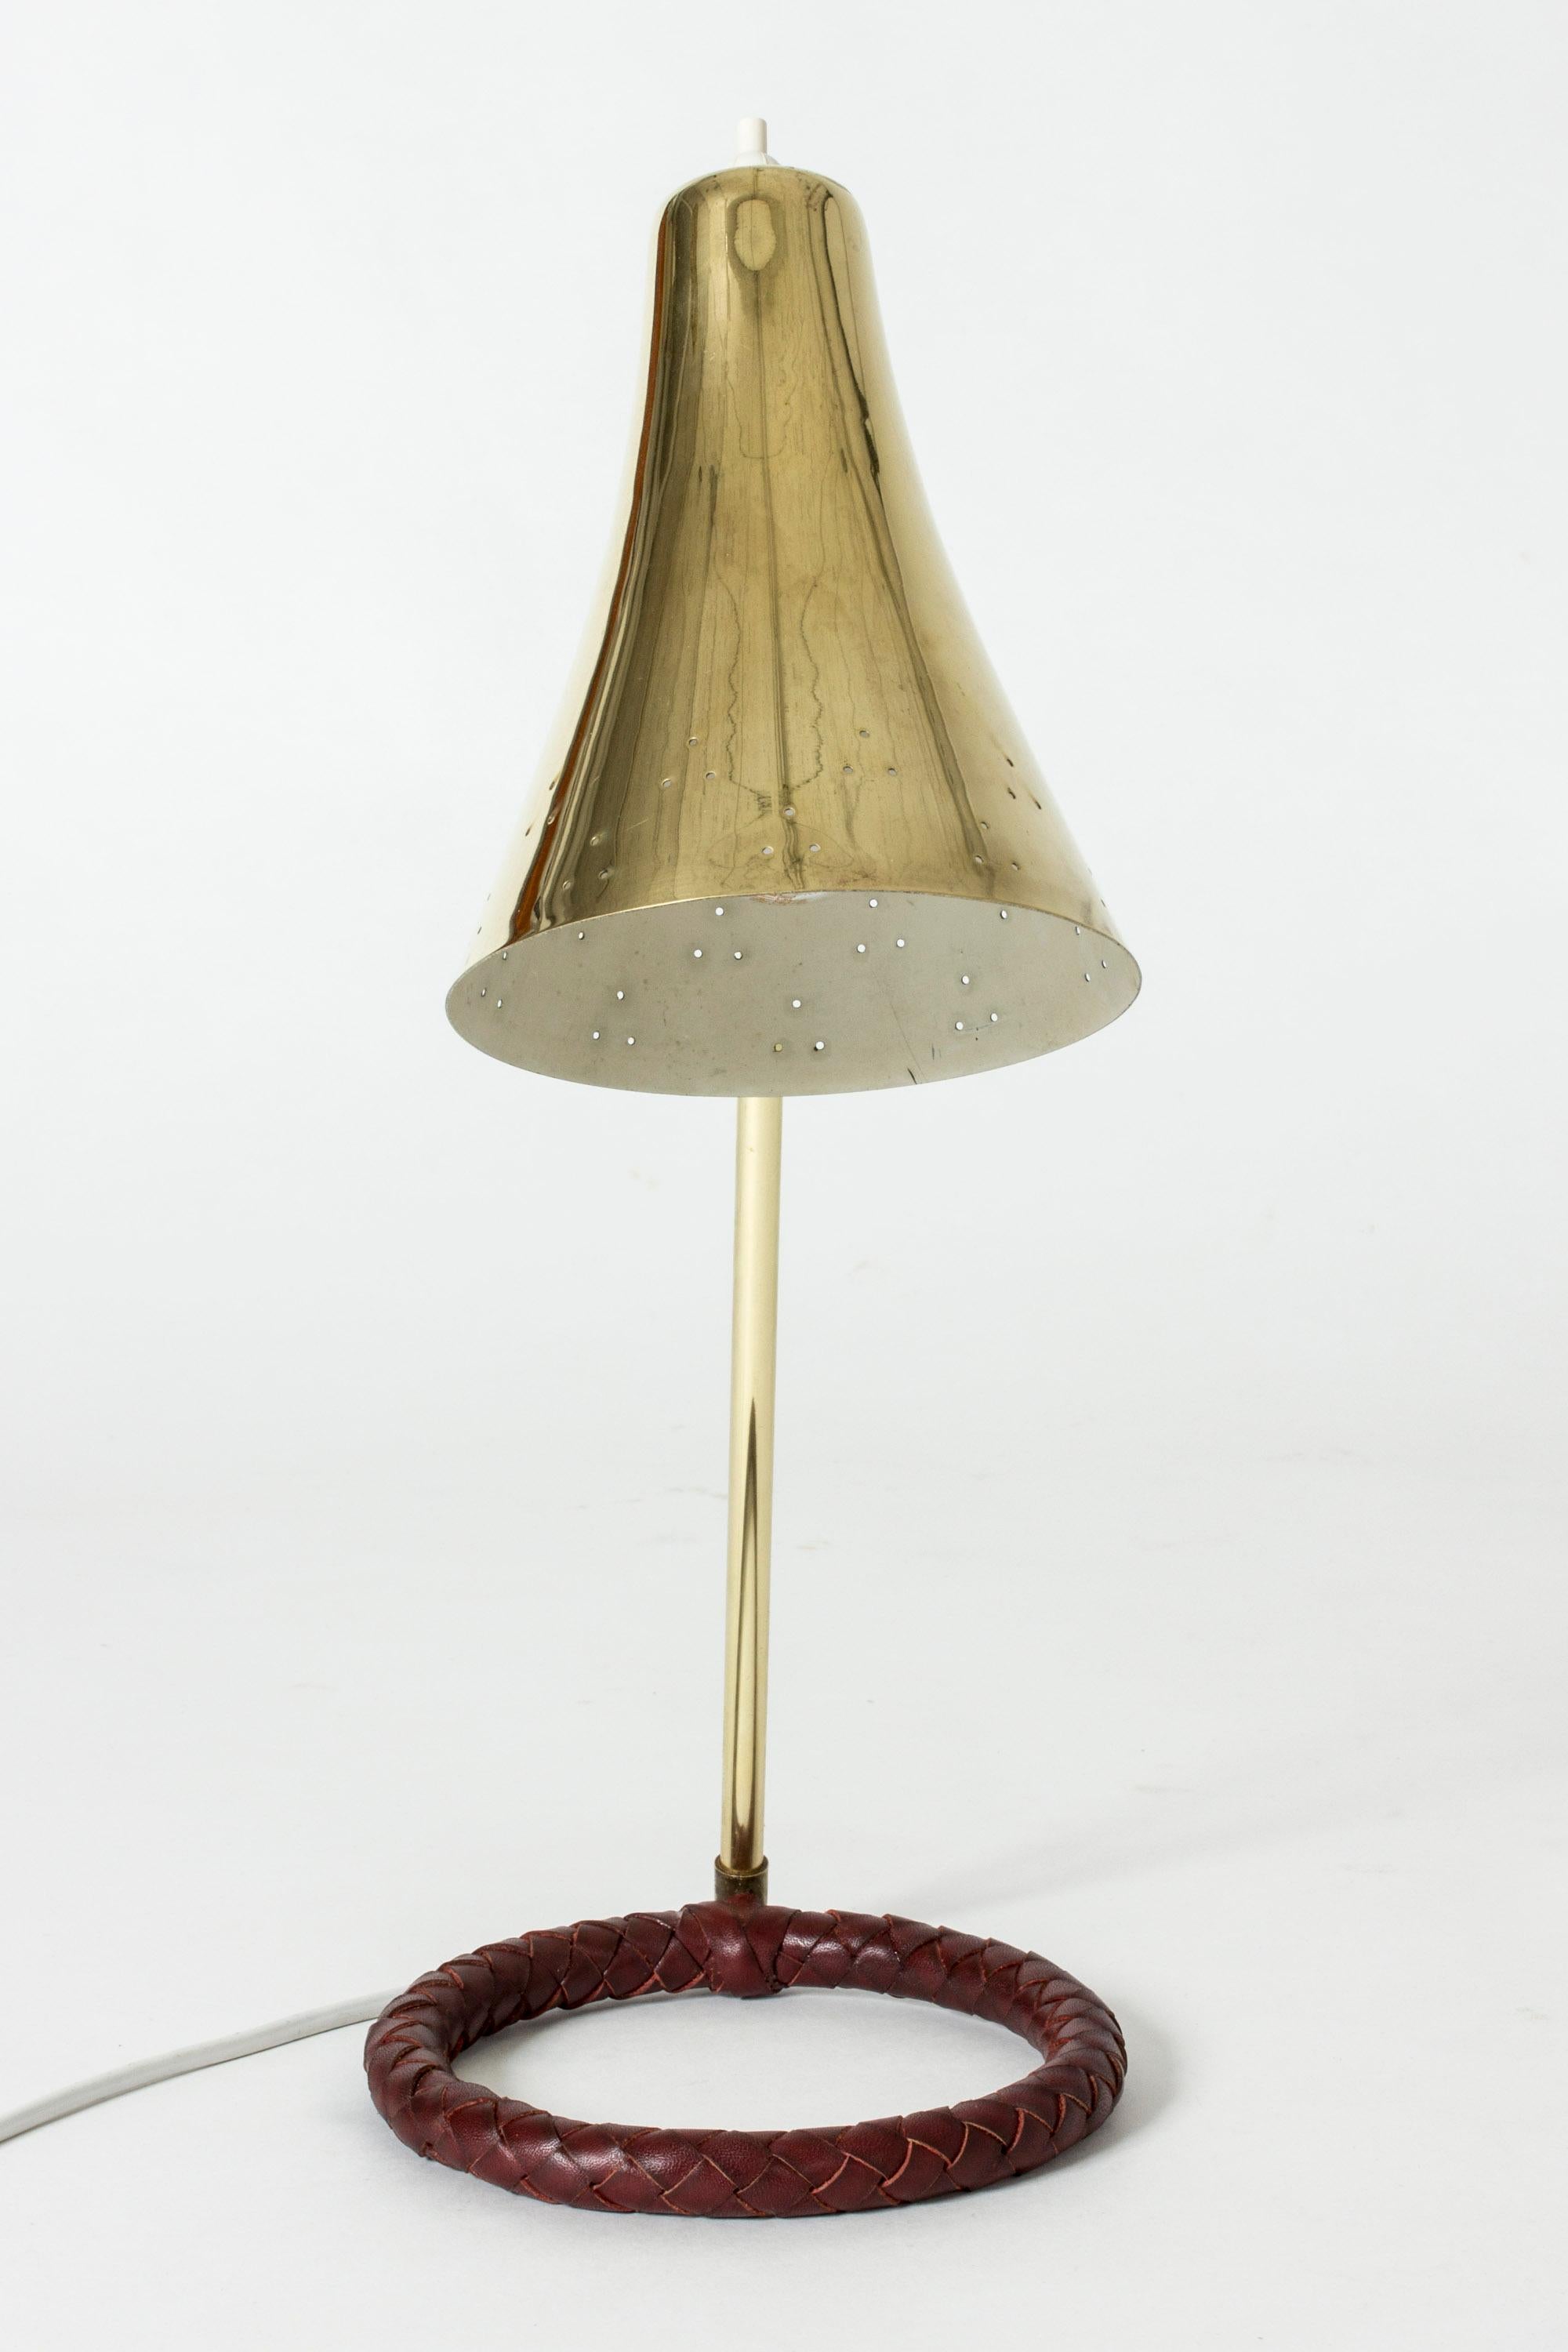 Scandinavian Modern Danish Midcentury Brass and Leather Table Lamp